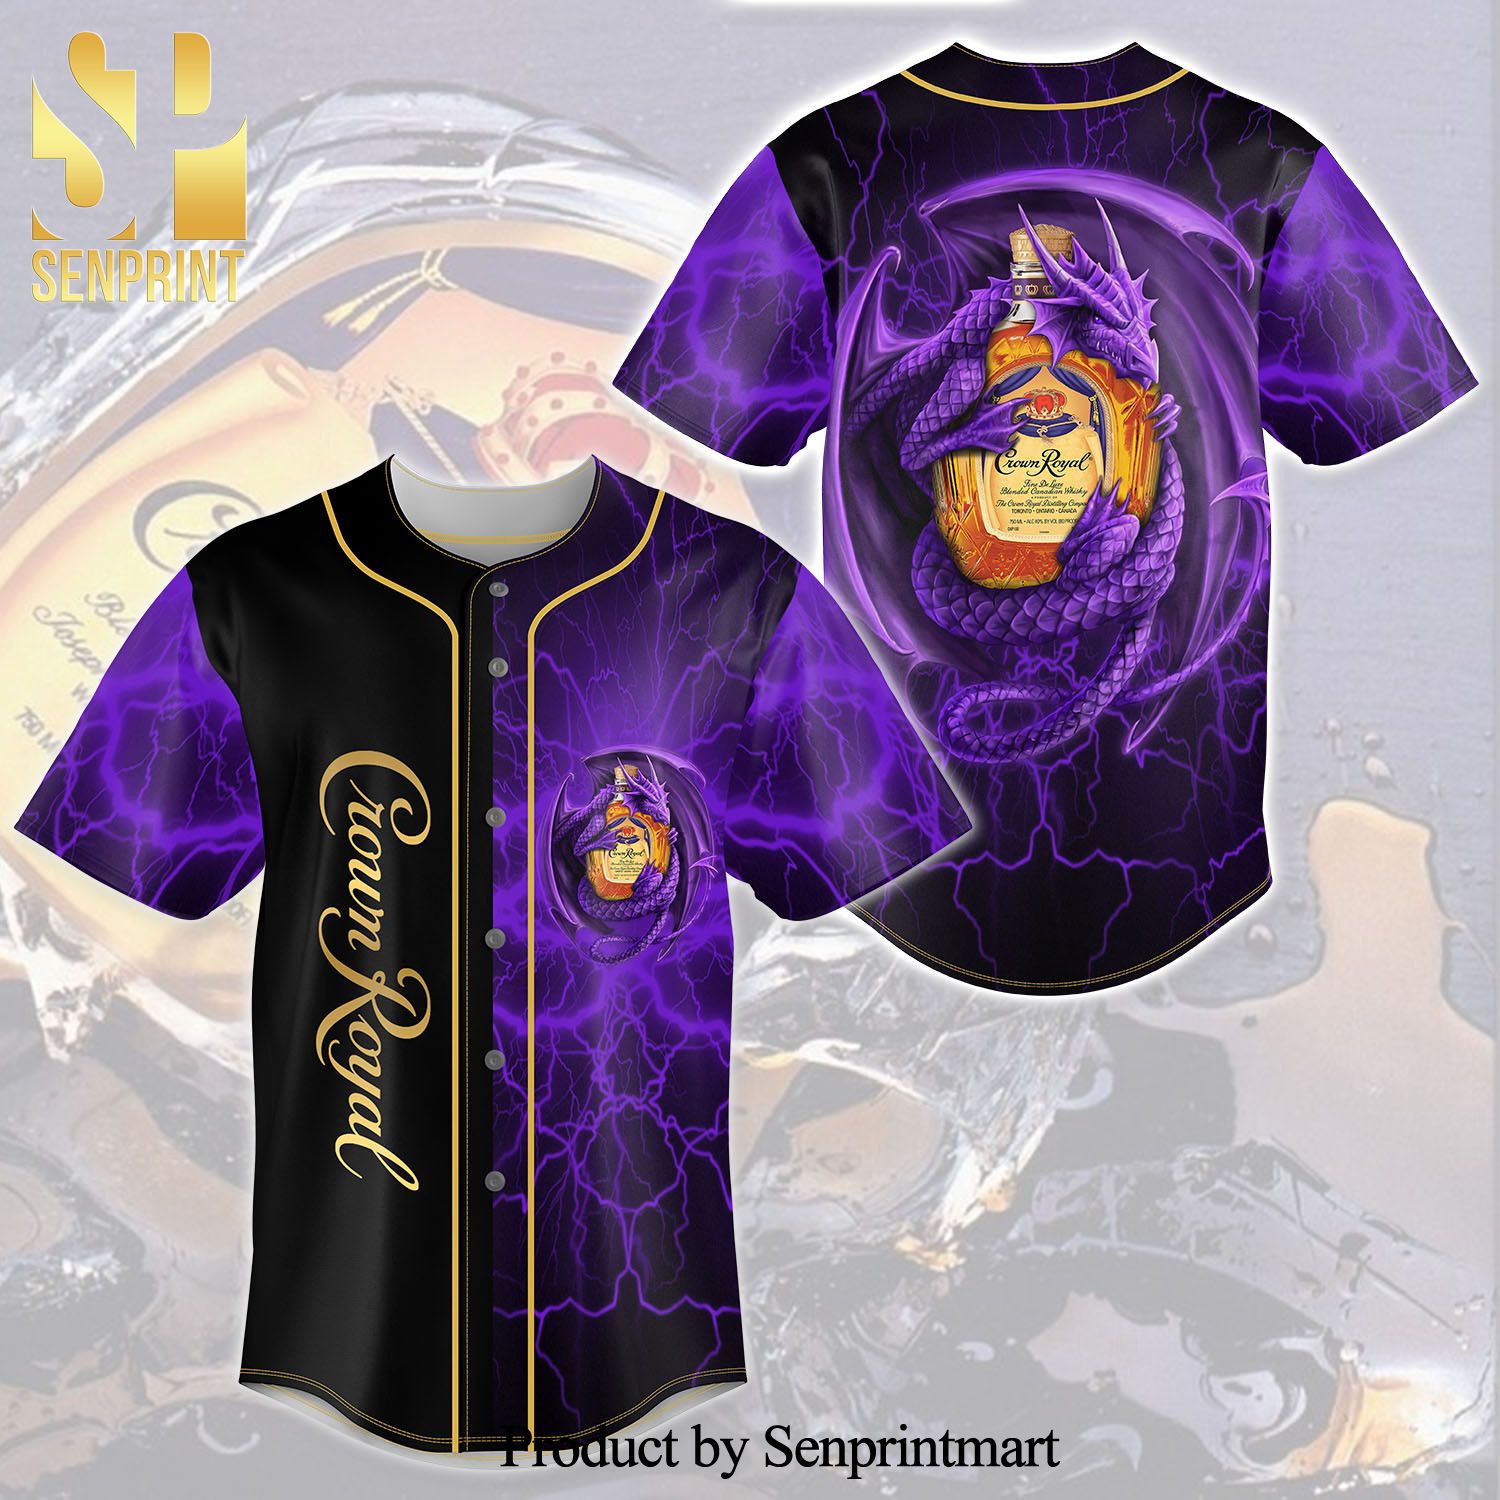 Crown Royal Dragon Thunder Full Printing Unisex Baseball Jersey – Black